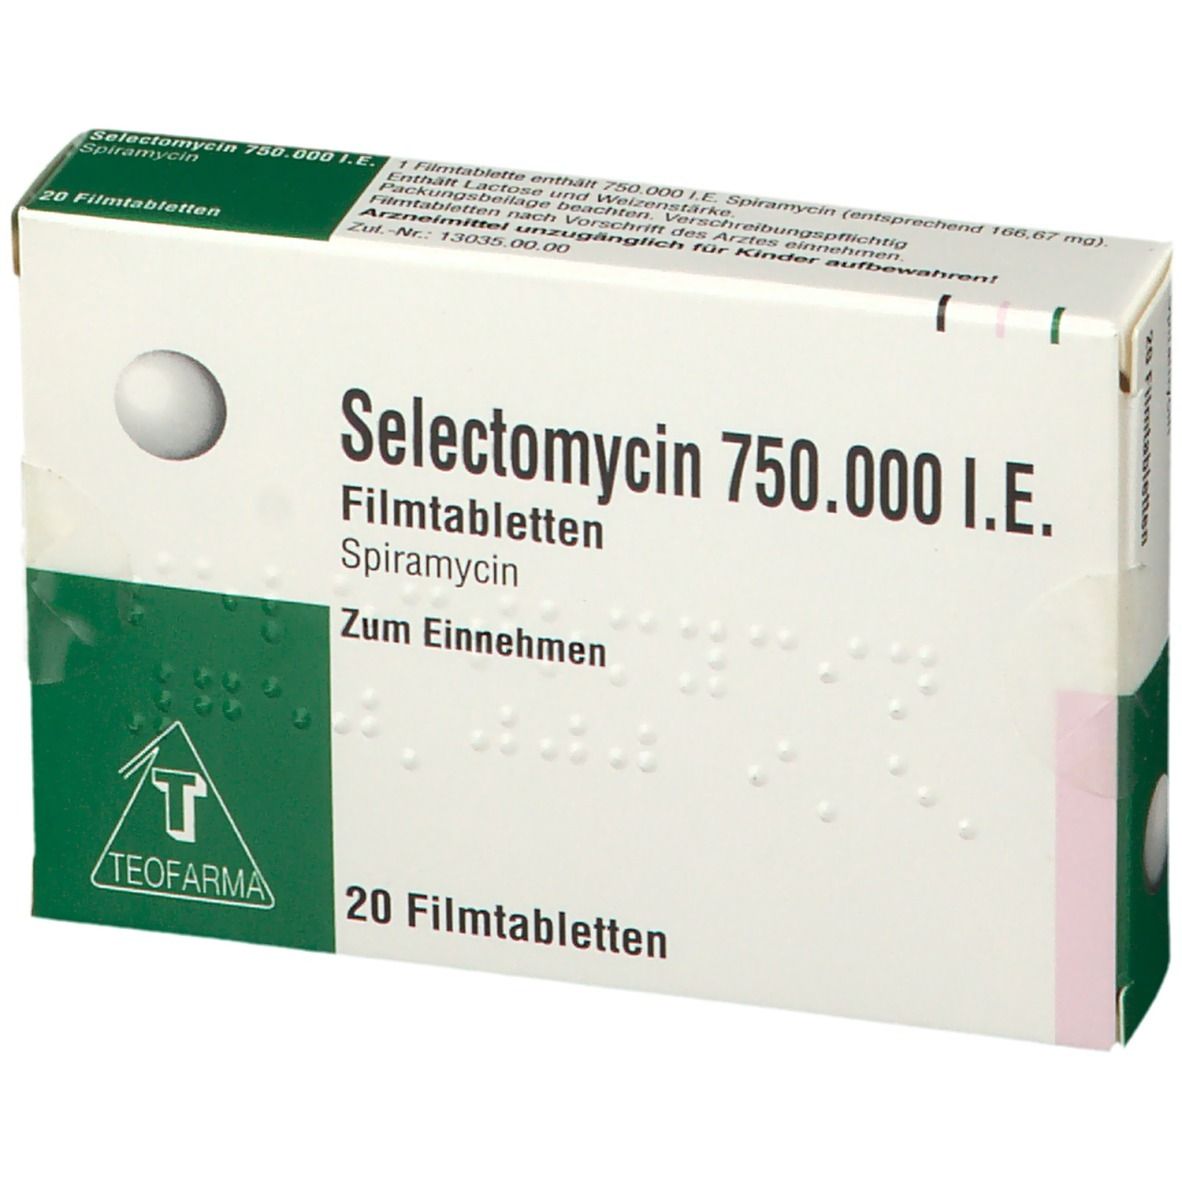 Selectomycin 750.000 I.E.